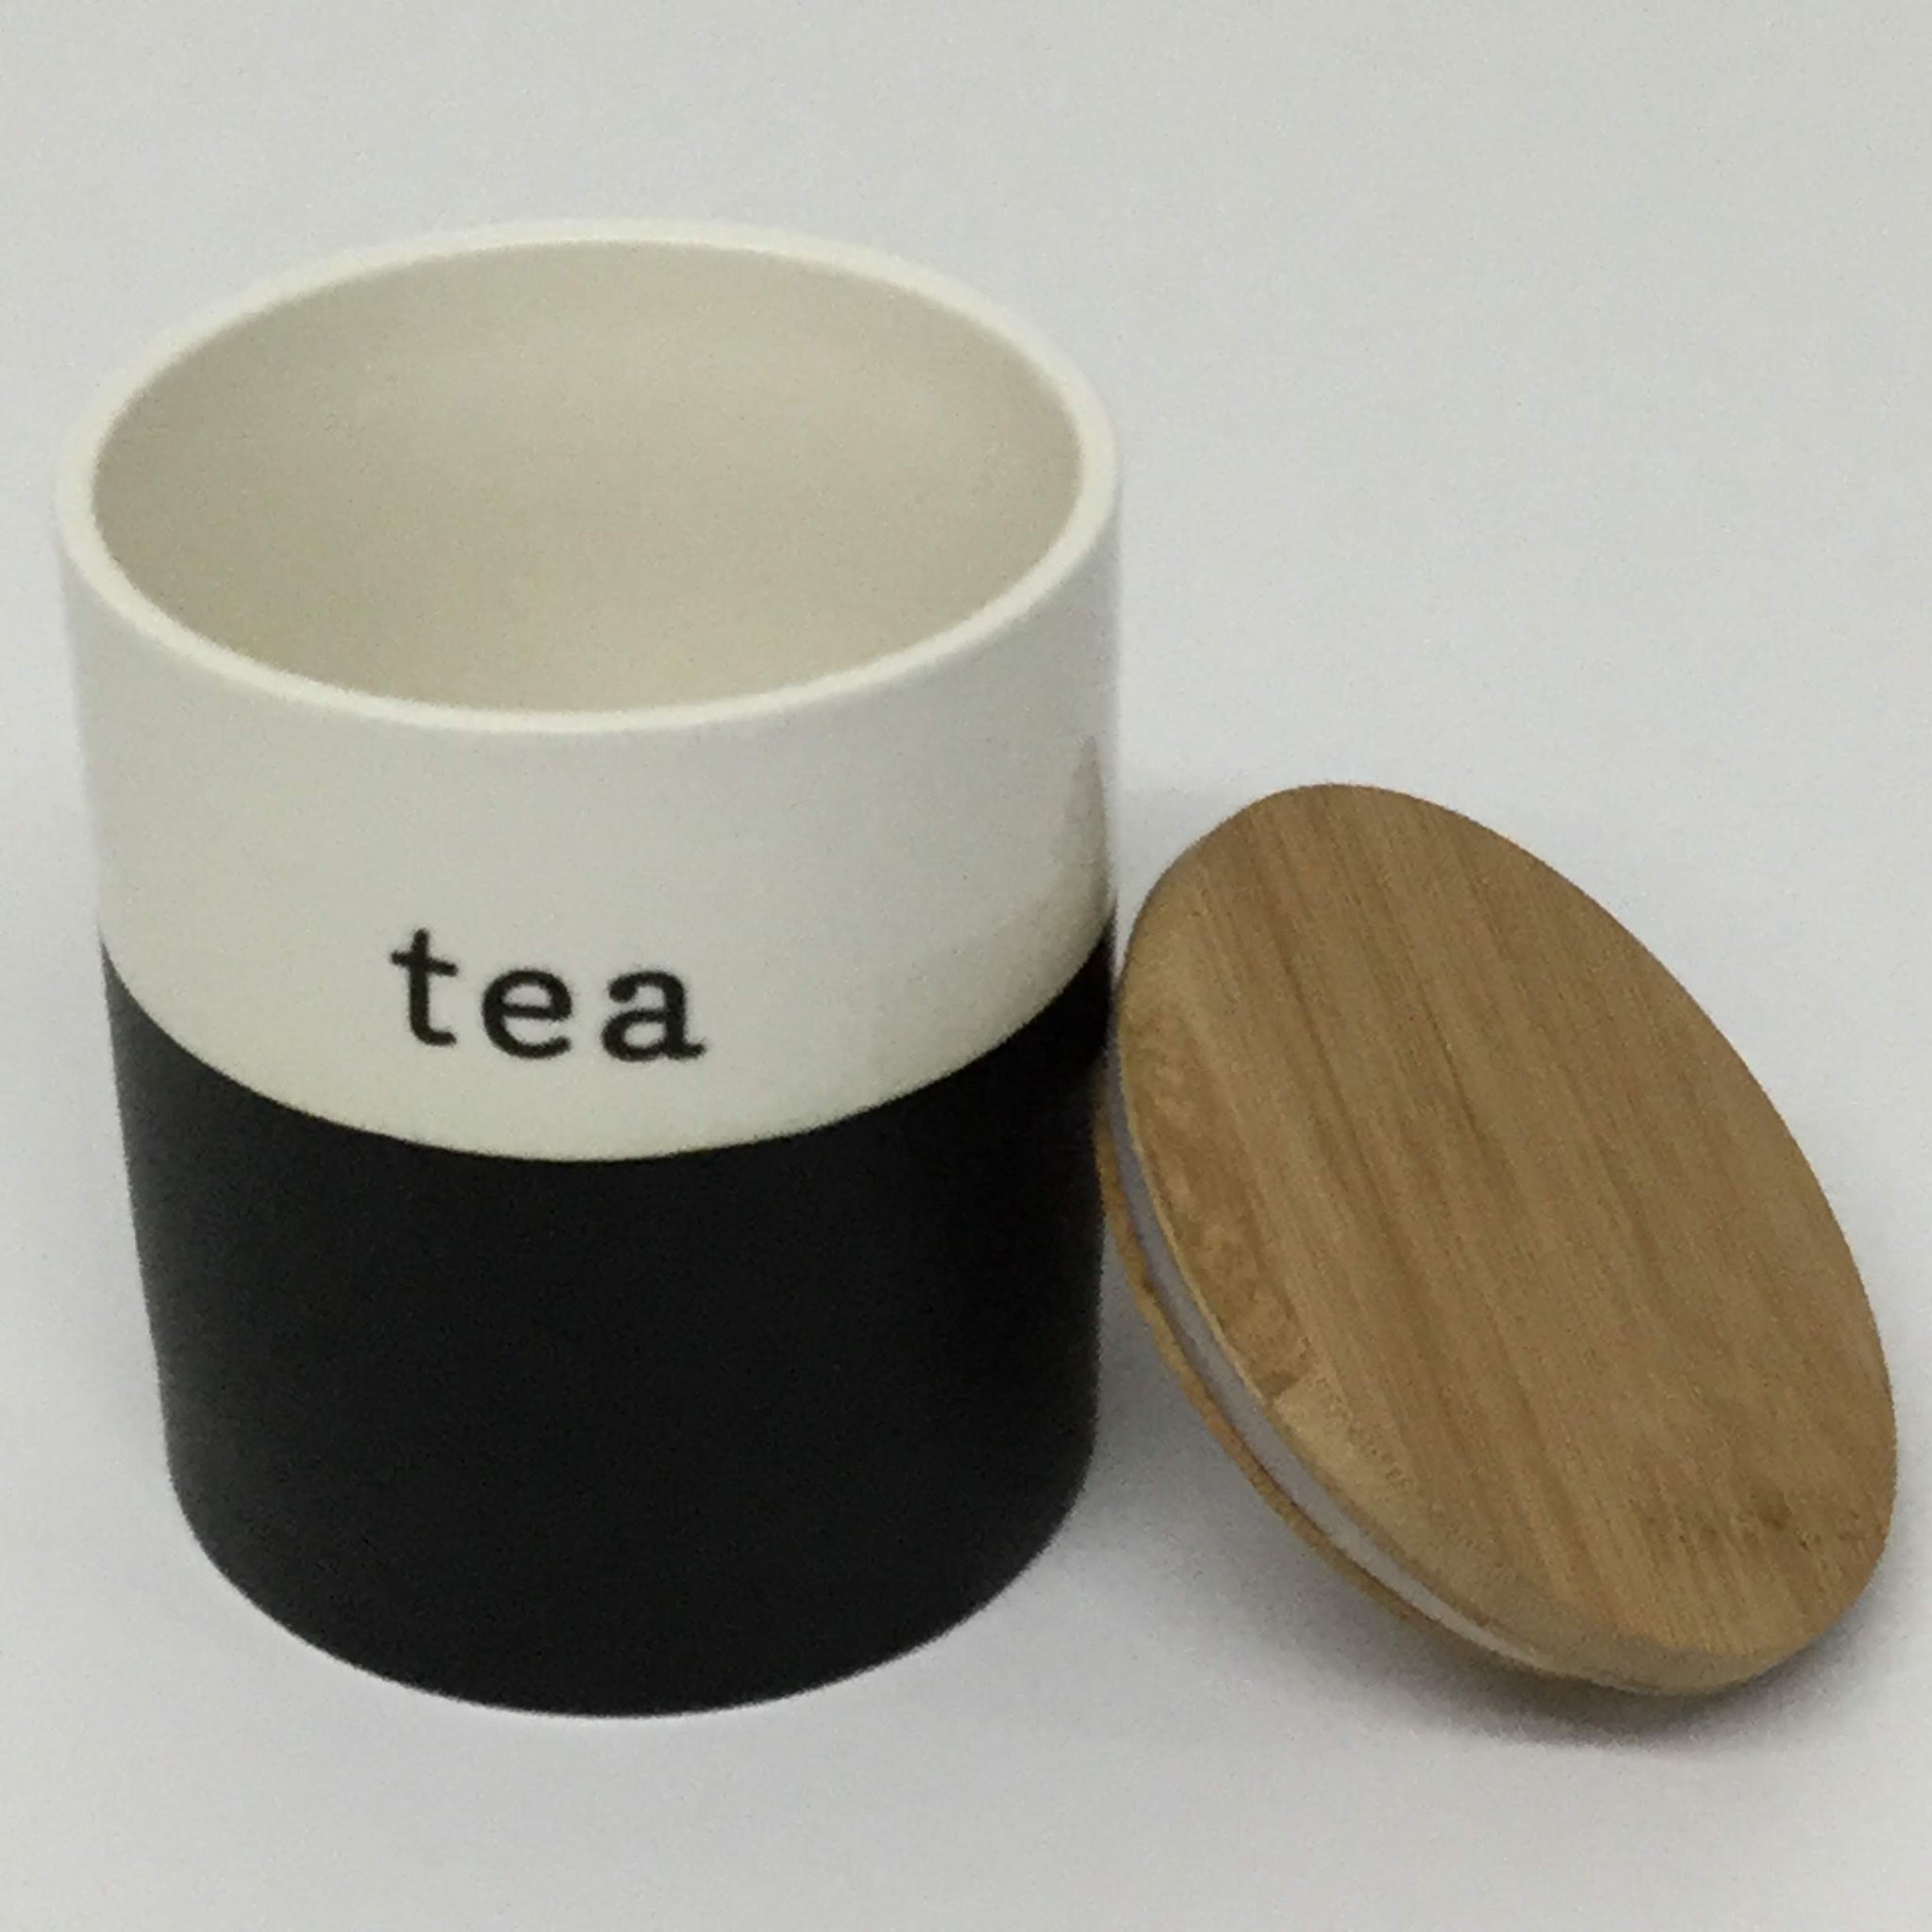 tea leaves canisters, tea leaves container, tea leaves holder